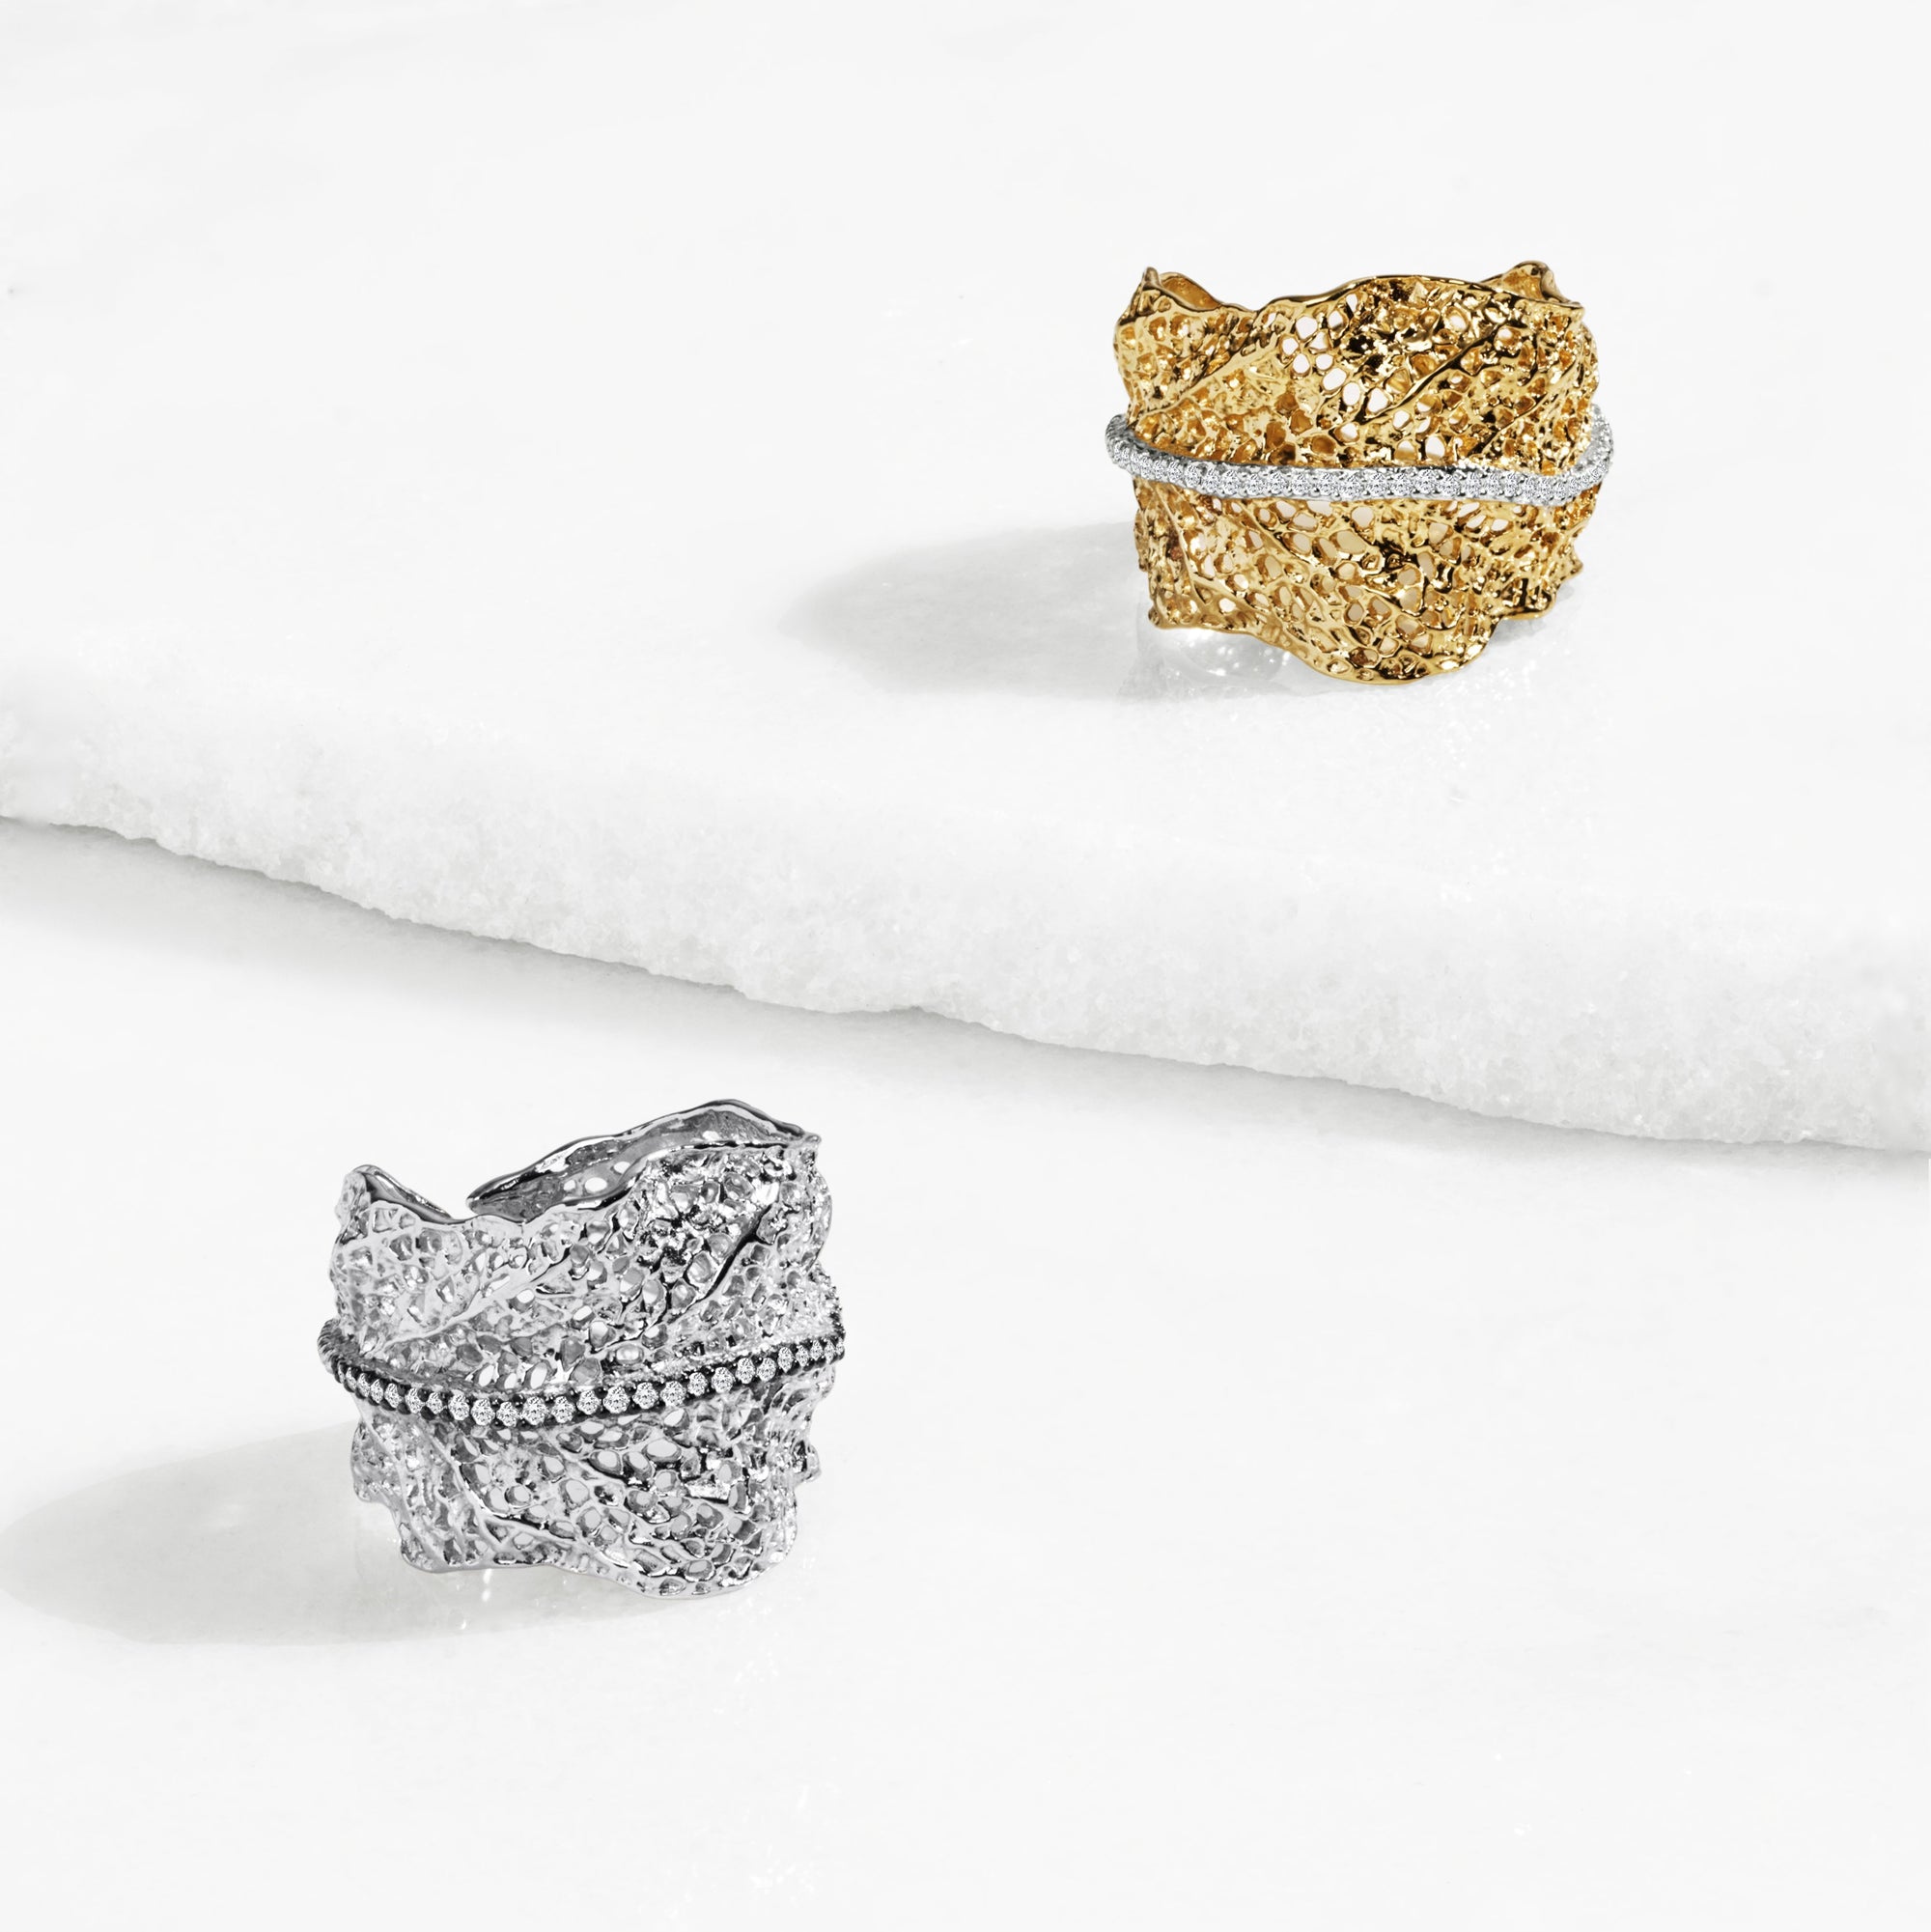 Michael Aram Gooseberry Ring with Diamonds